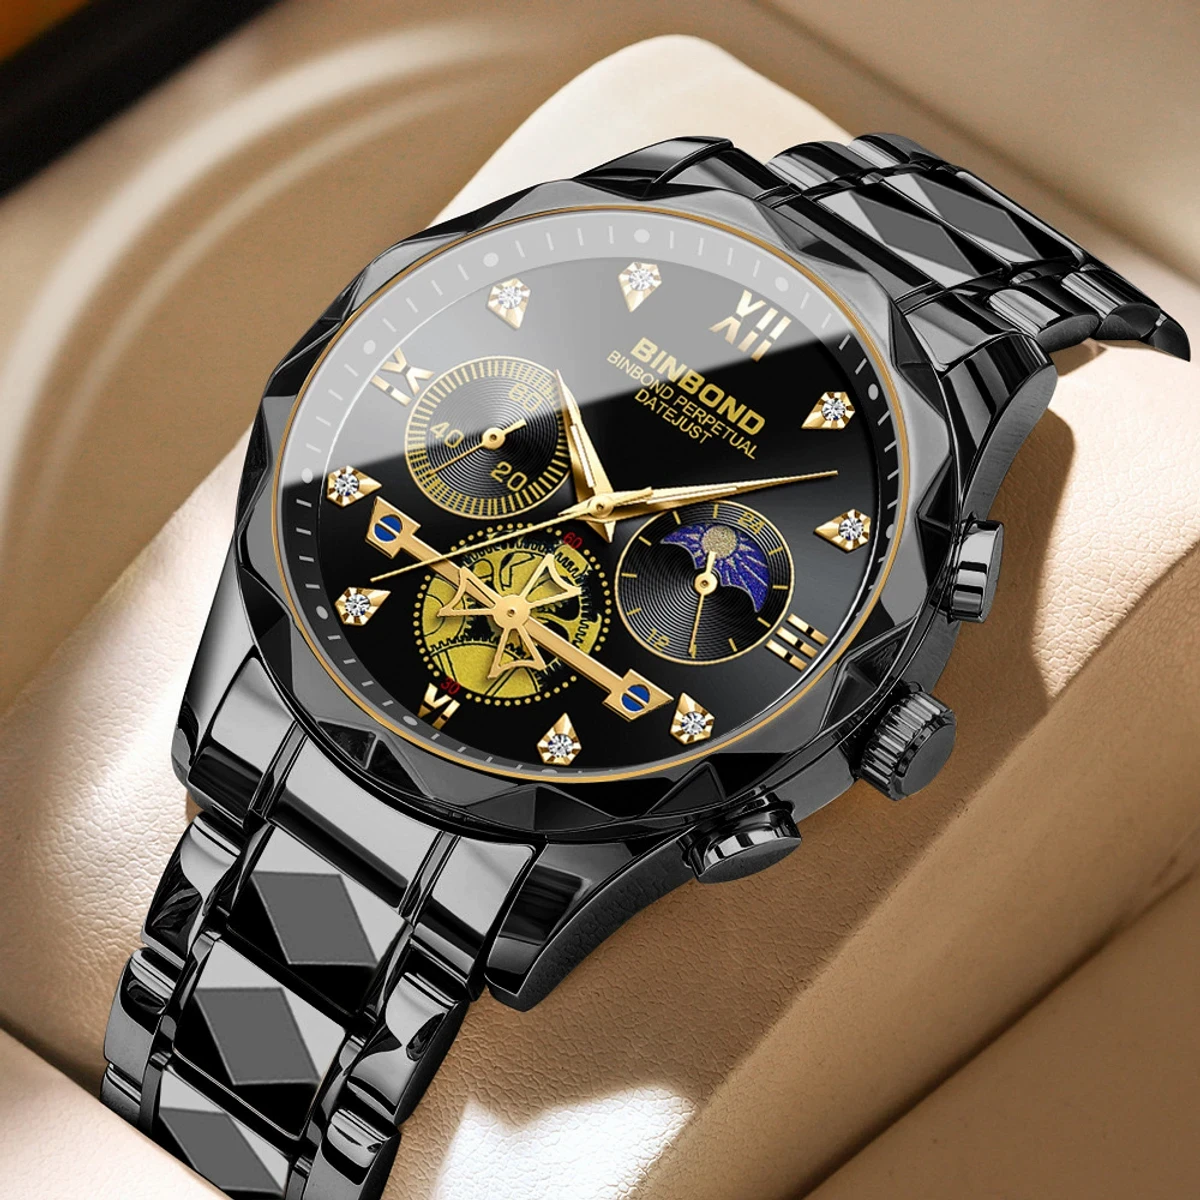 New Luxury Diamond Watch For Men Stainless Steel Waterproof Chronograph Luminous Date Business Sport Wristwatches- Black